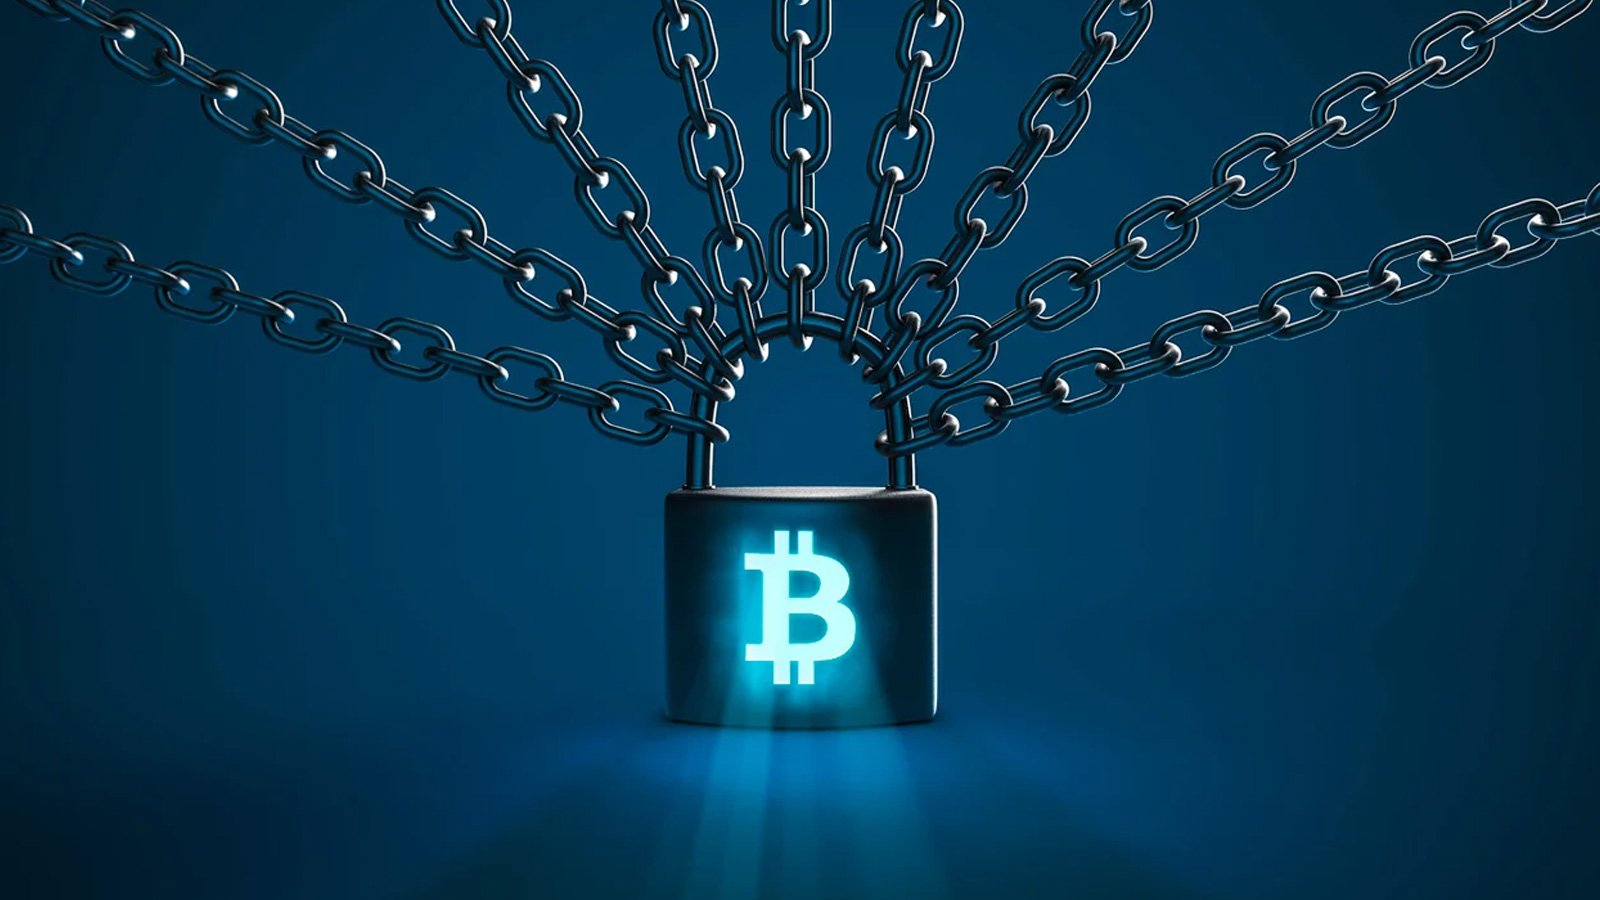 Bitcoin lock in chains